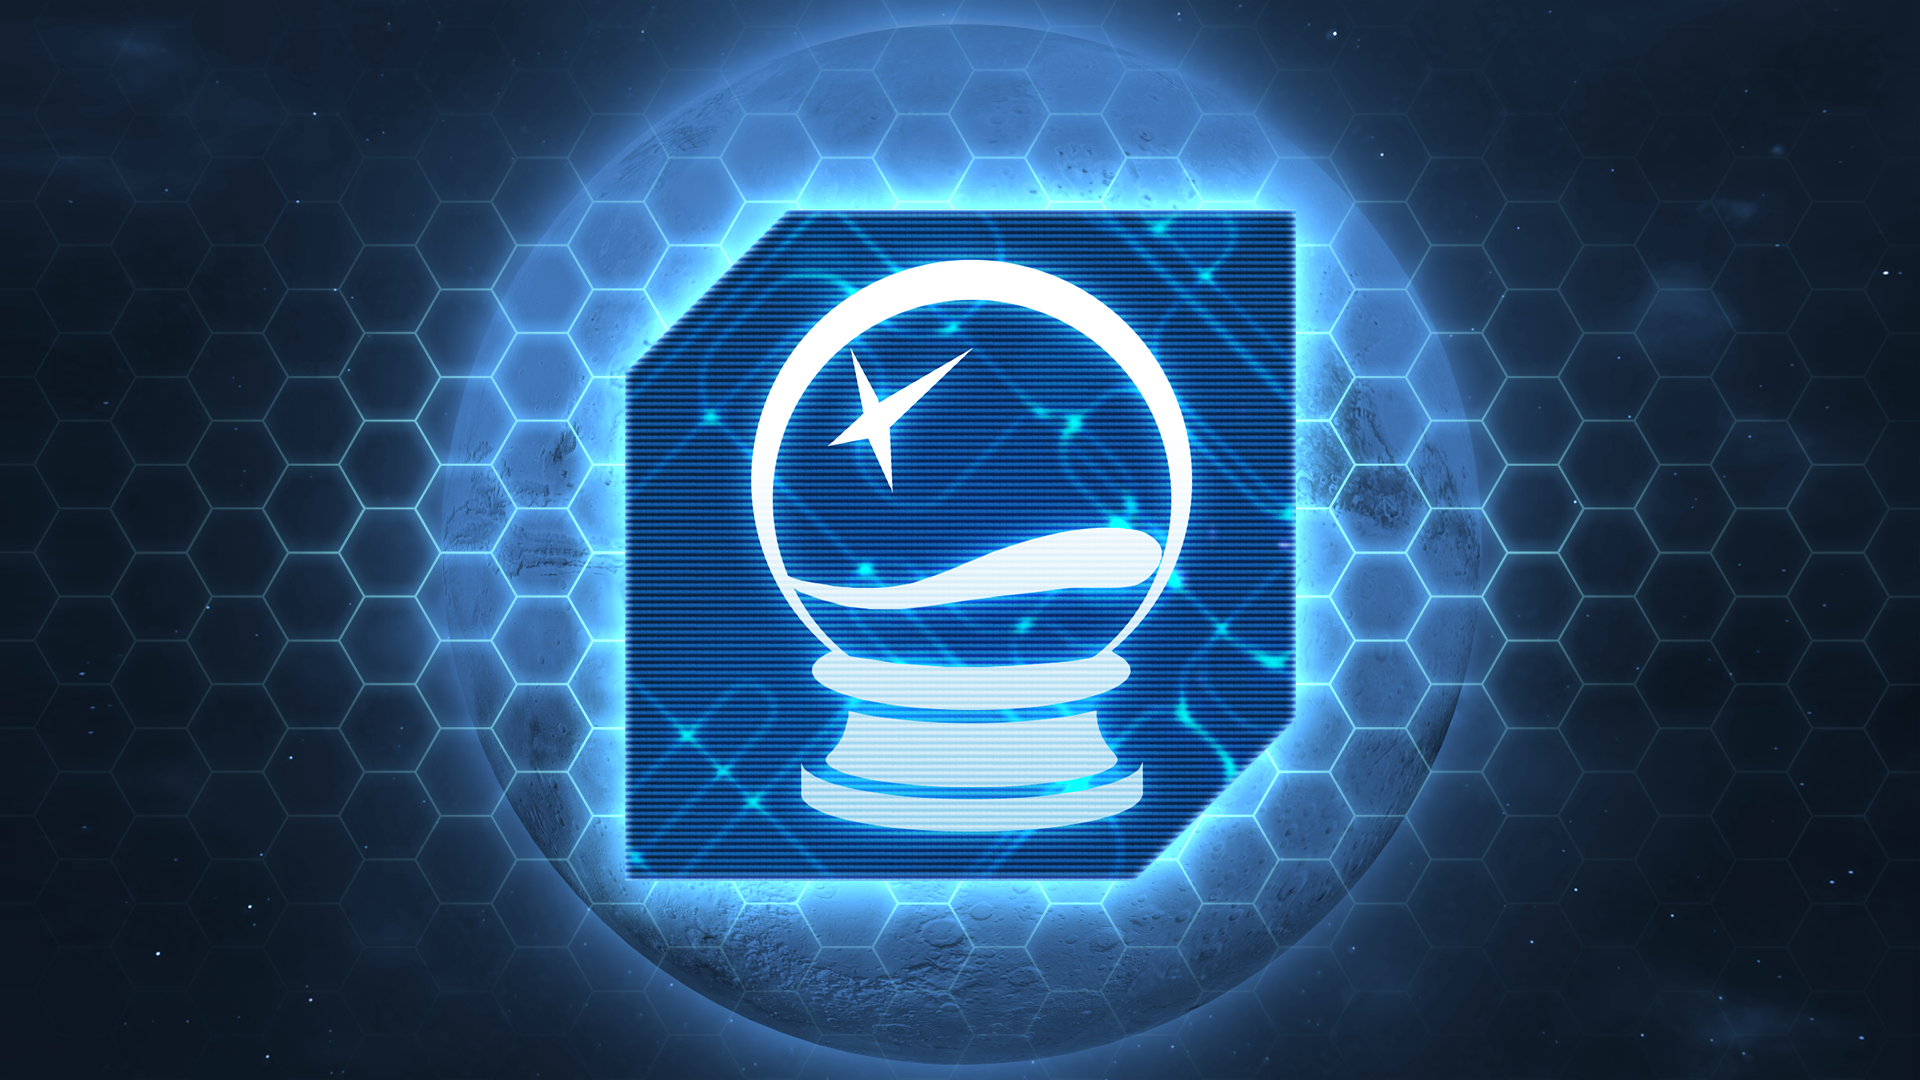 Icon for Snow Globe